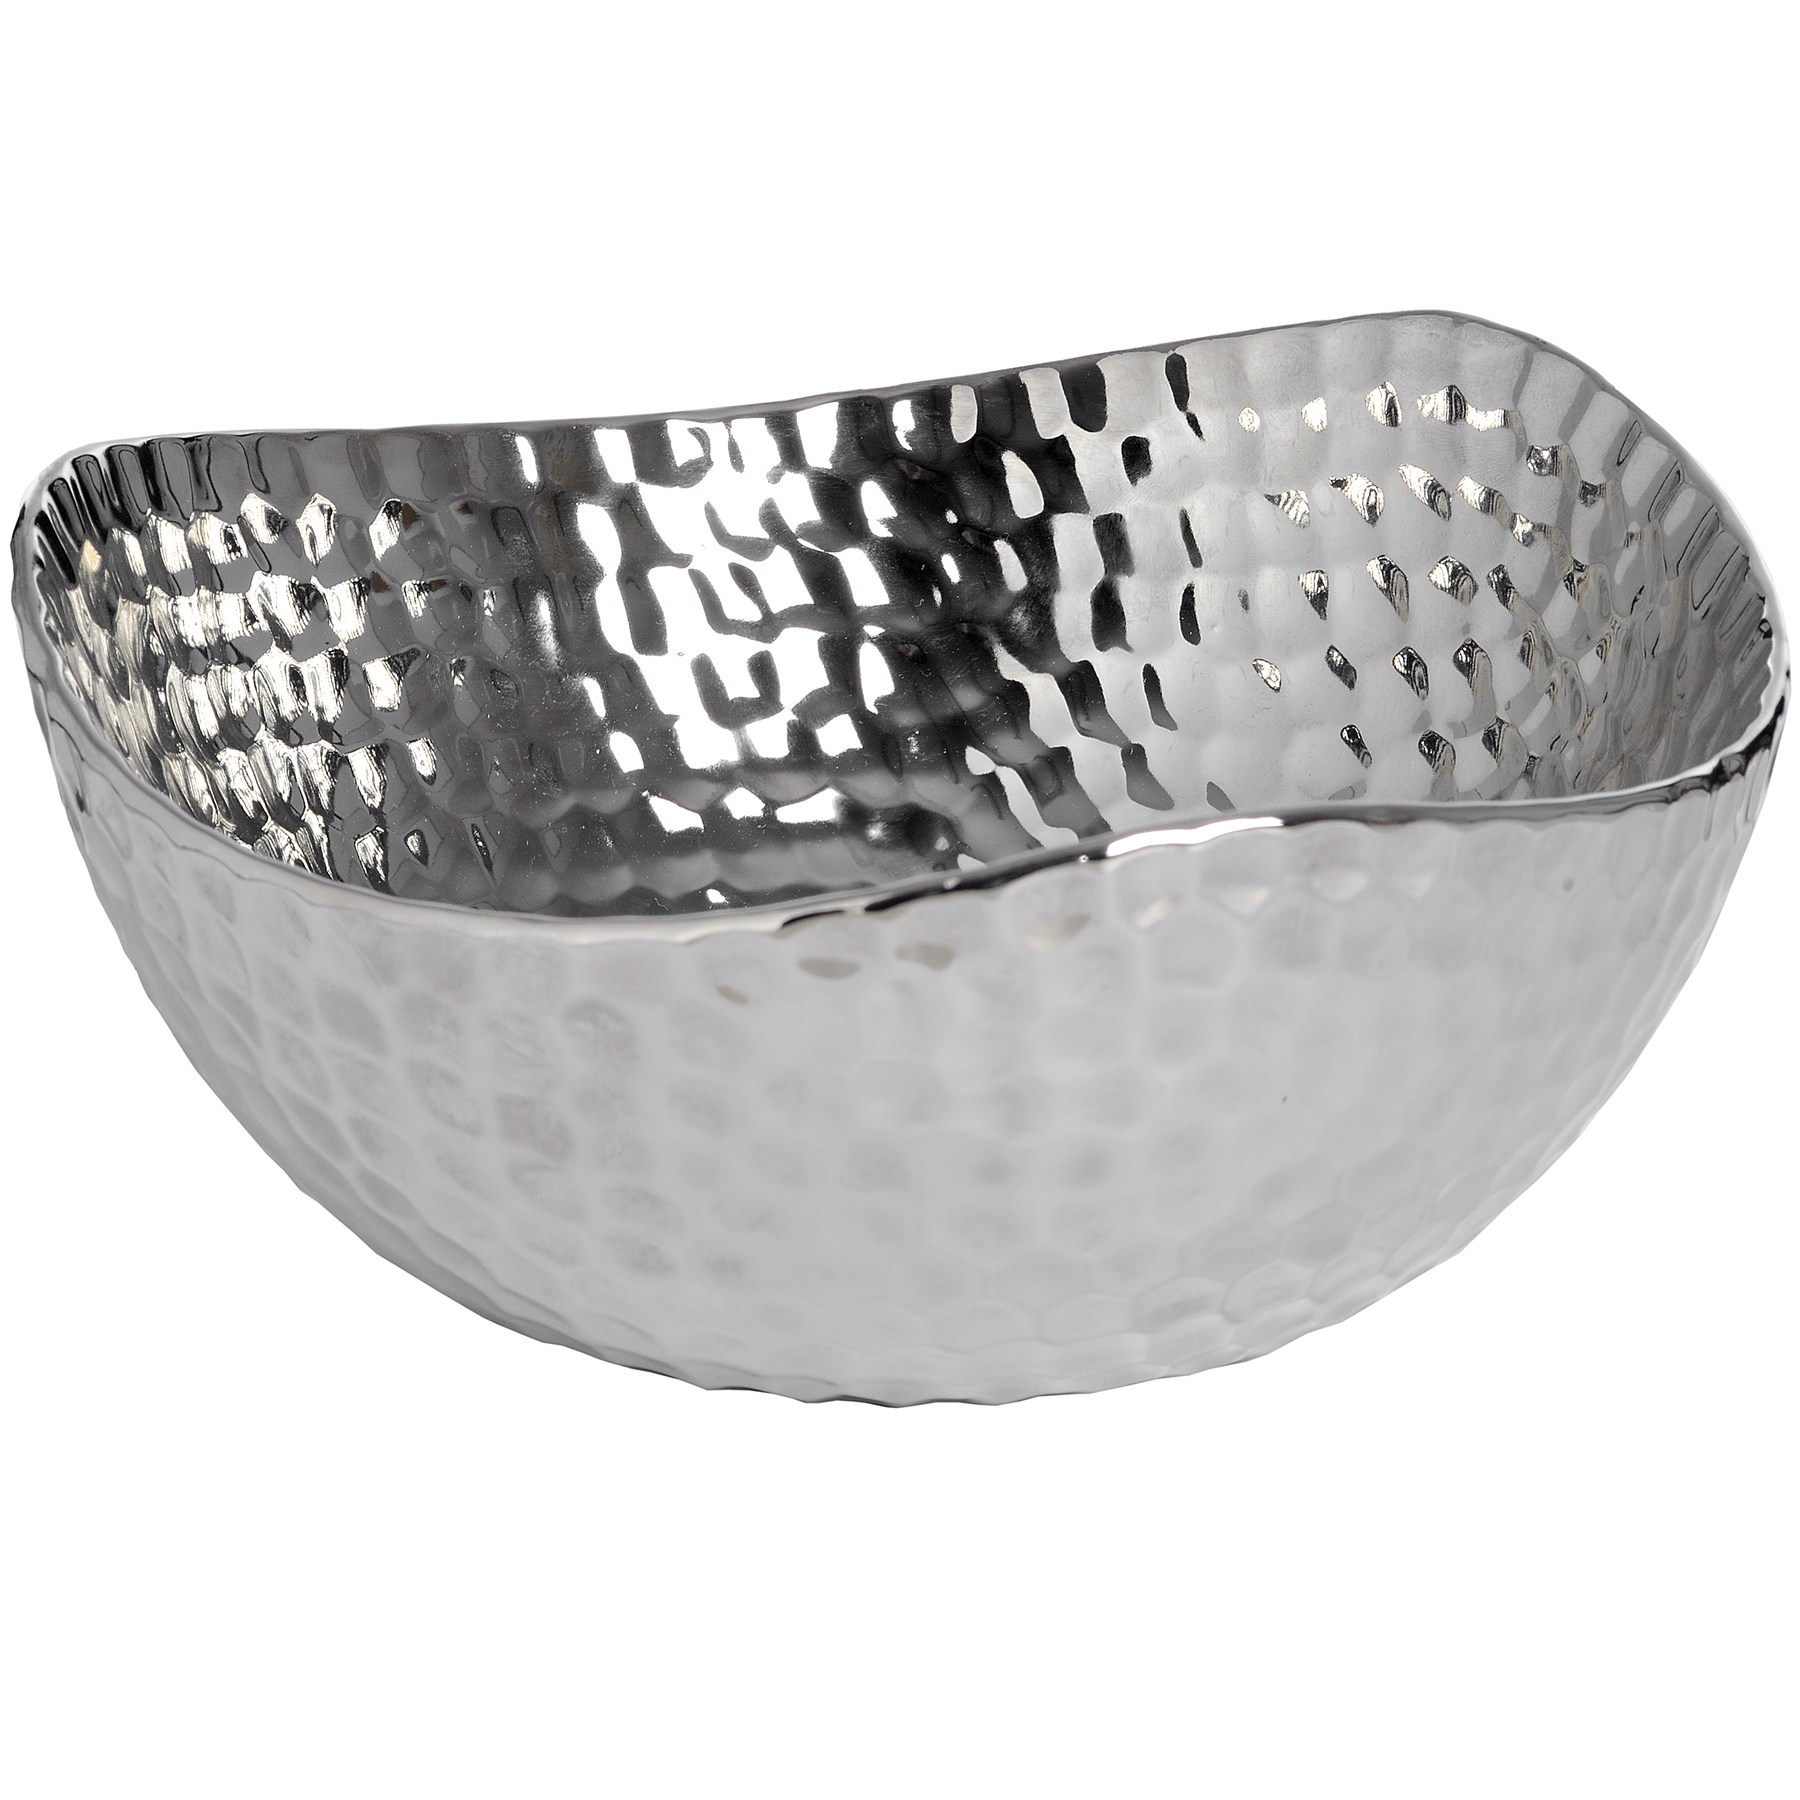 Silver Ceramic Dimple Effect Display Bowl - Image 2